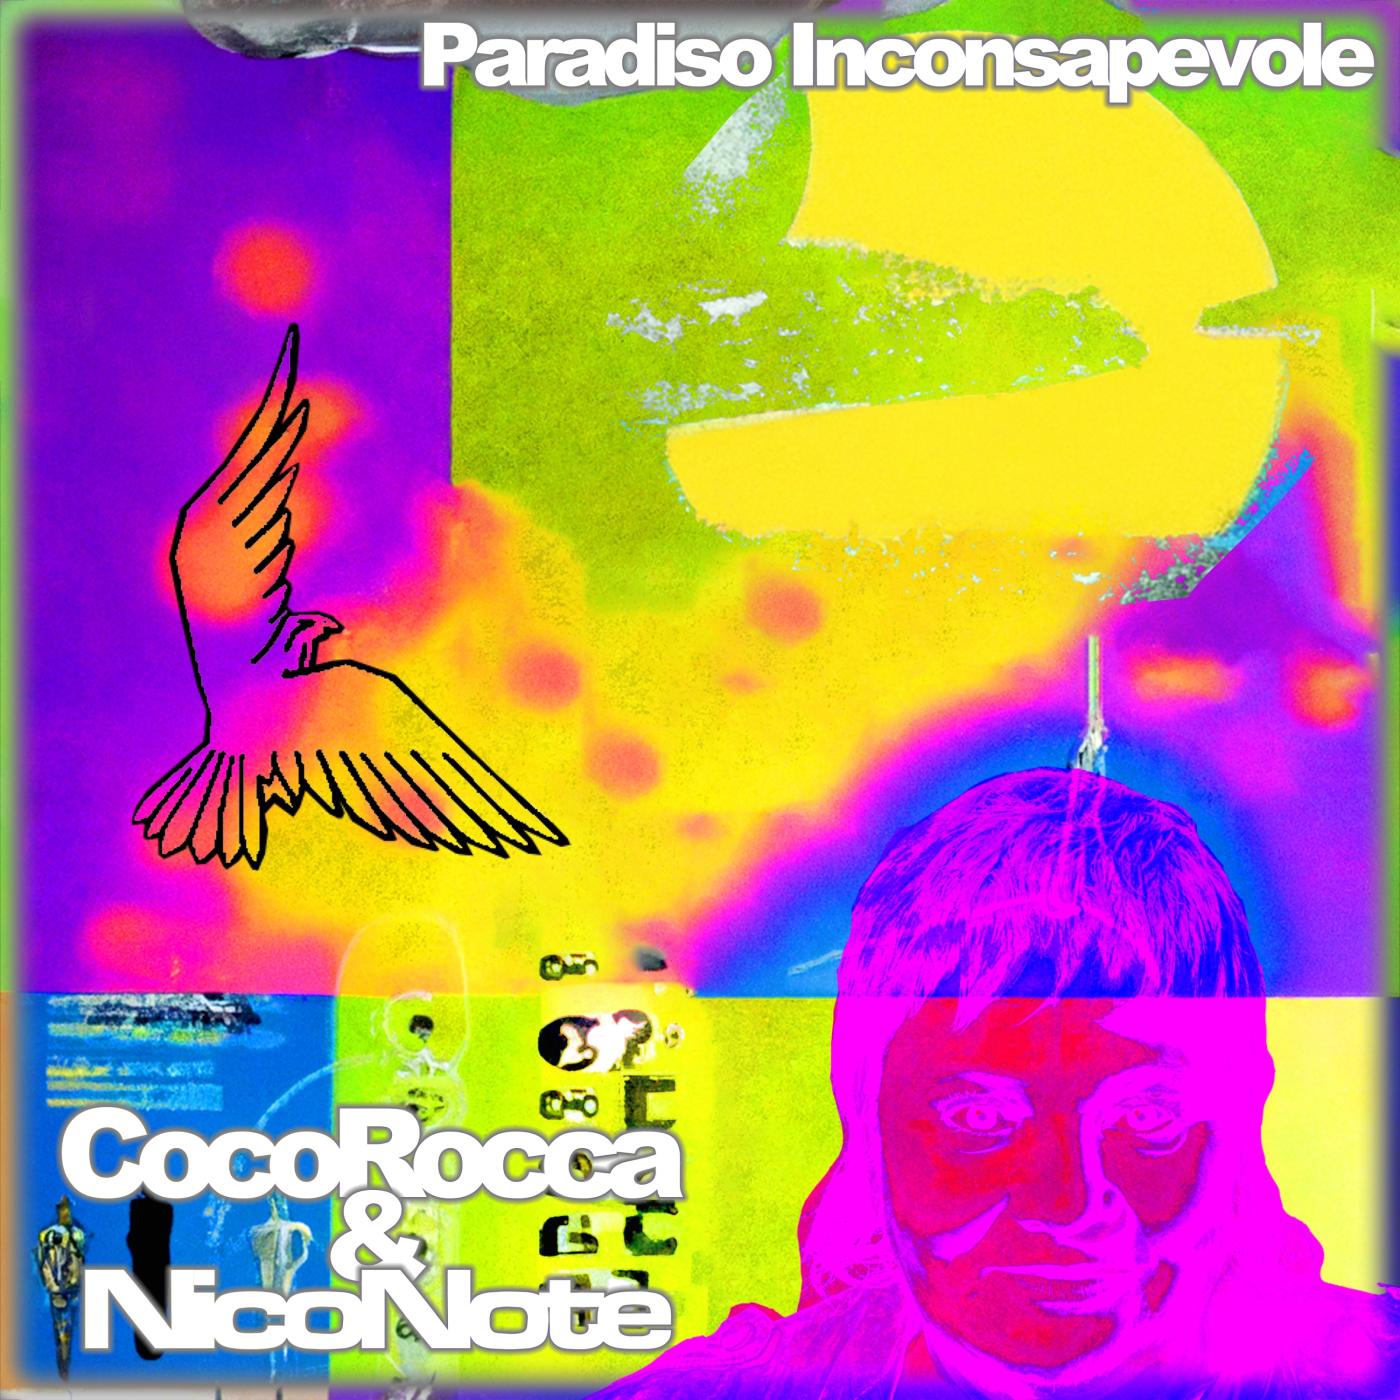 Chris Coco - Paradiso Inconsapevole (Chris Coco Version)